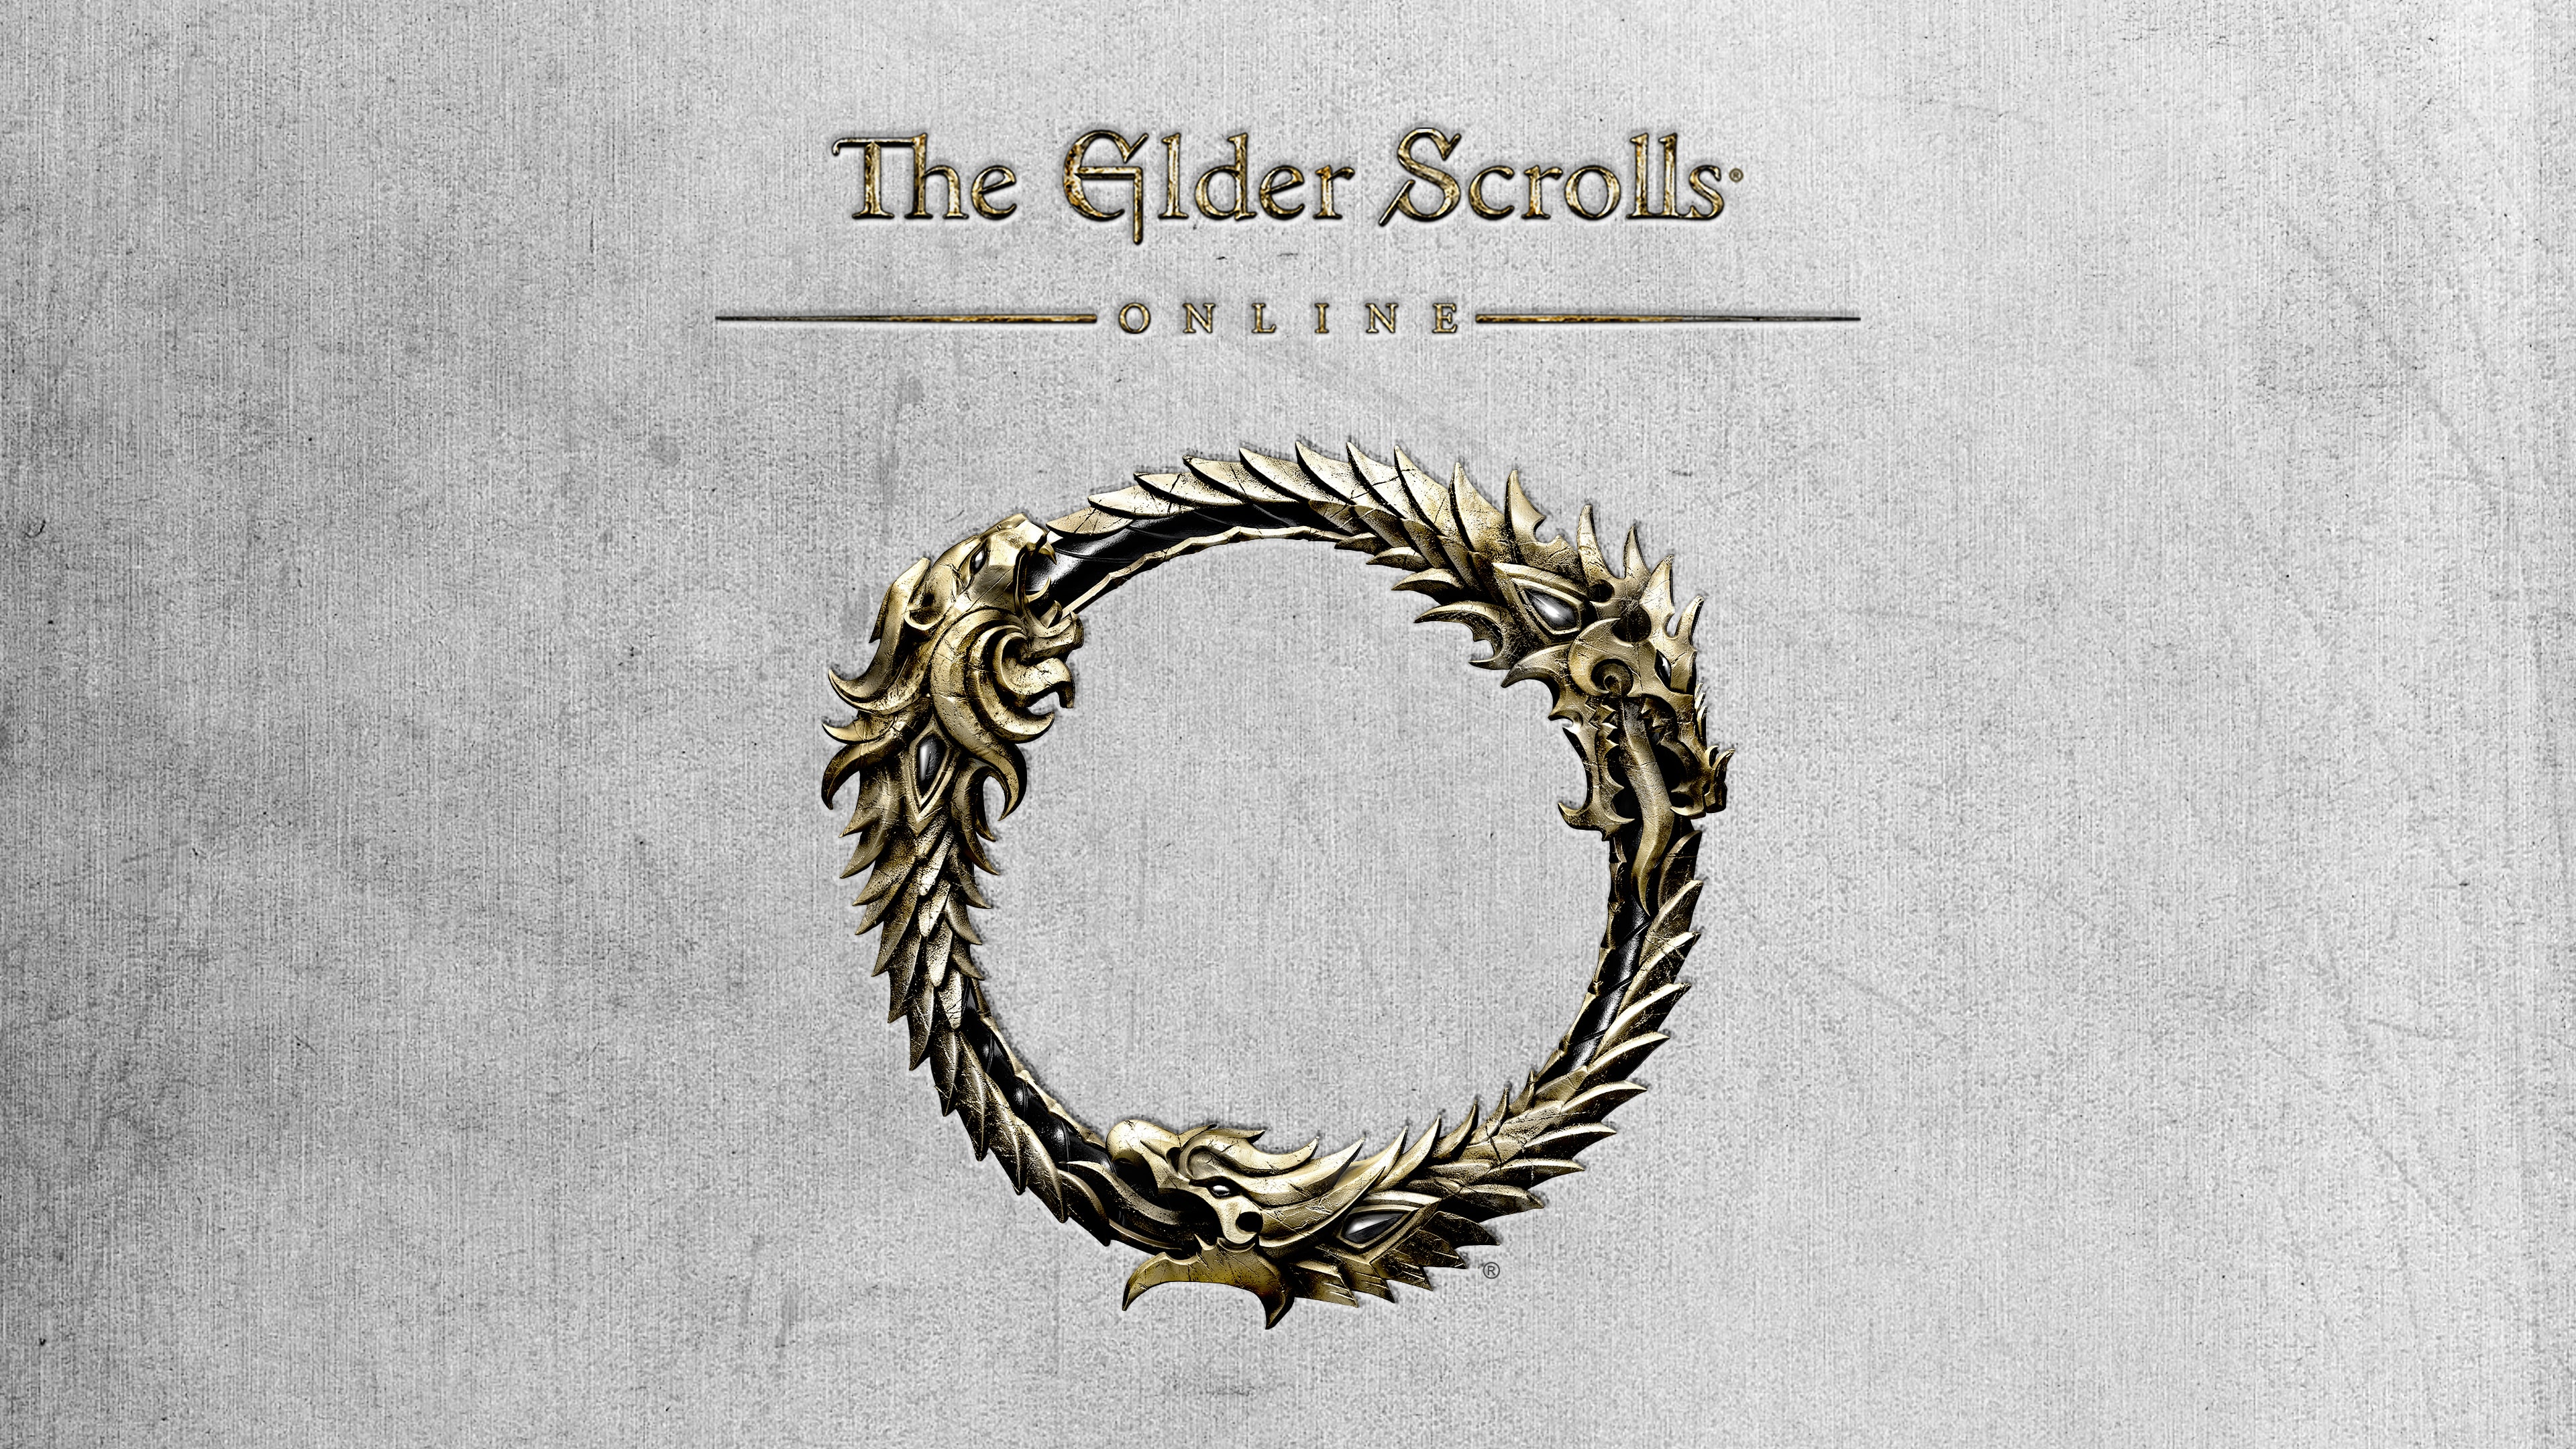 The Elder Scrolls Online - PS4 (English)